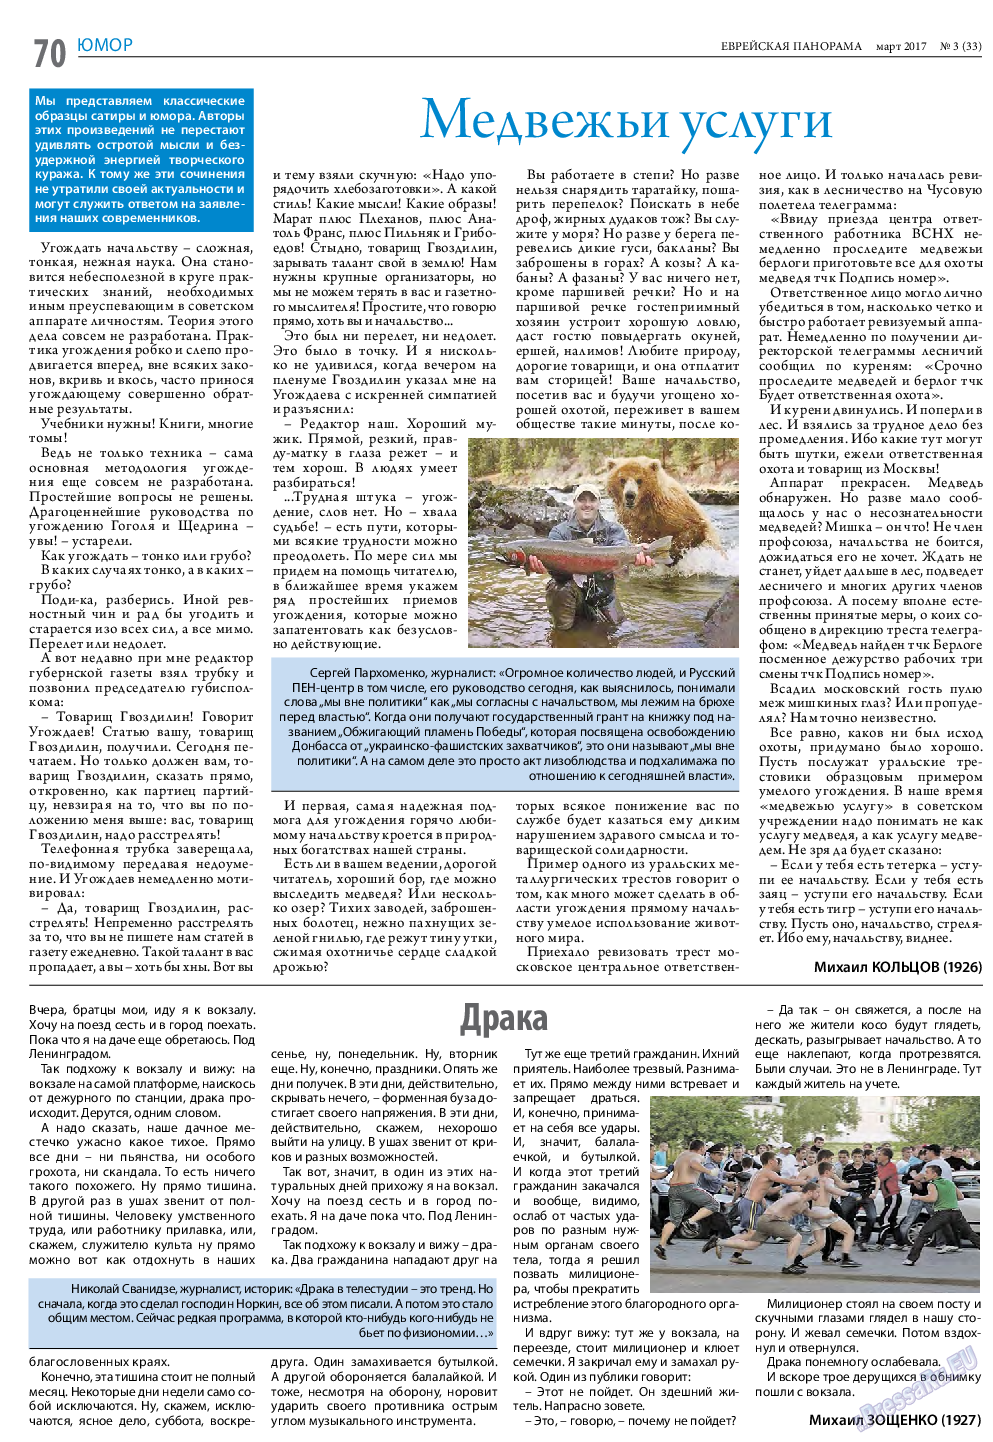 Еврейская панорама, газета. 2017 №3 стр.70